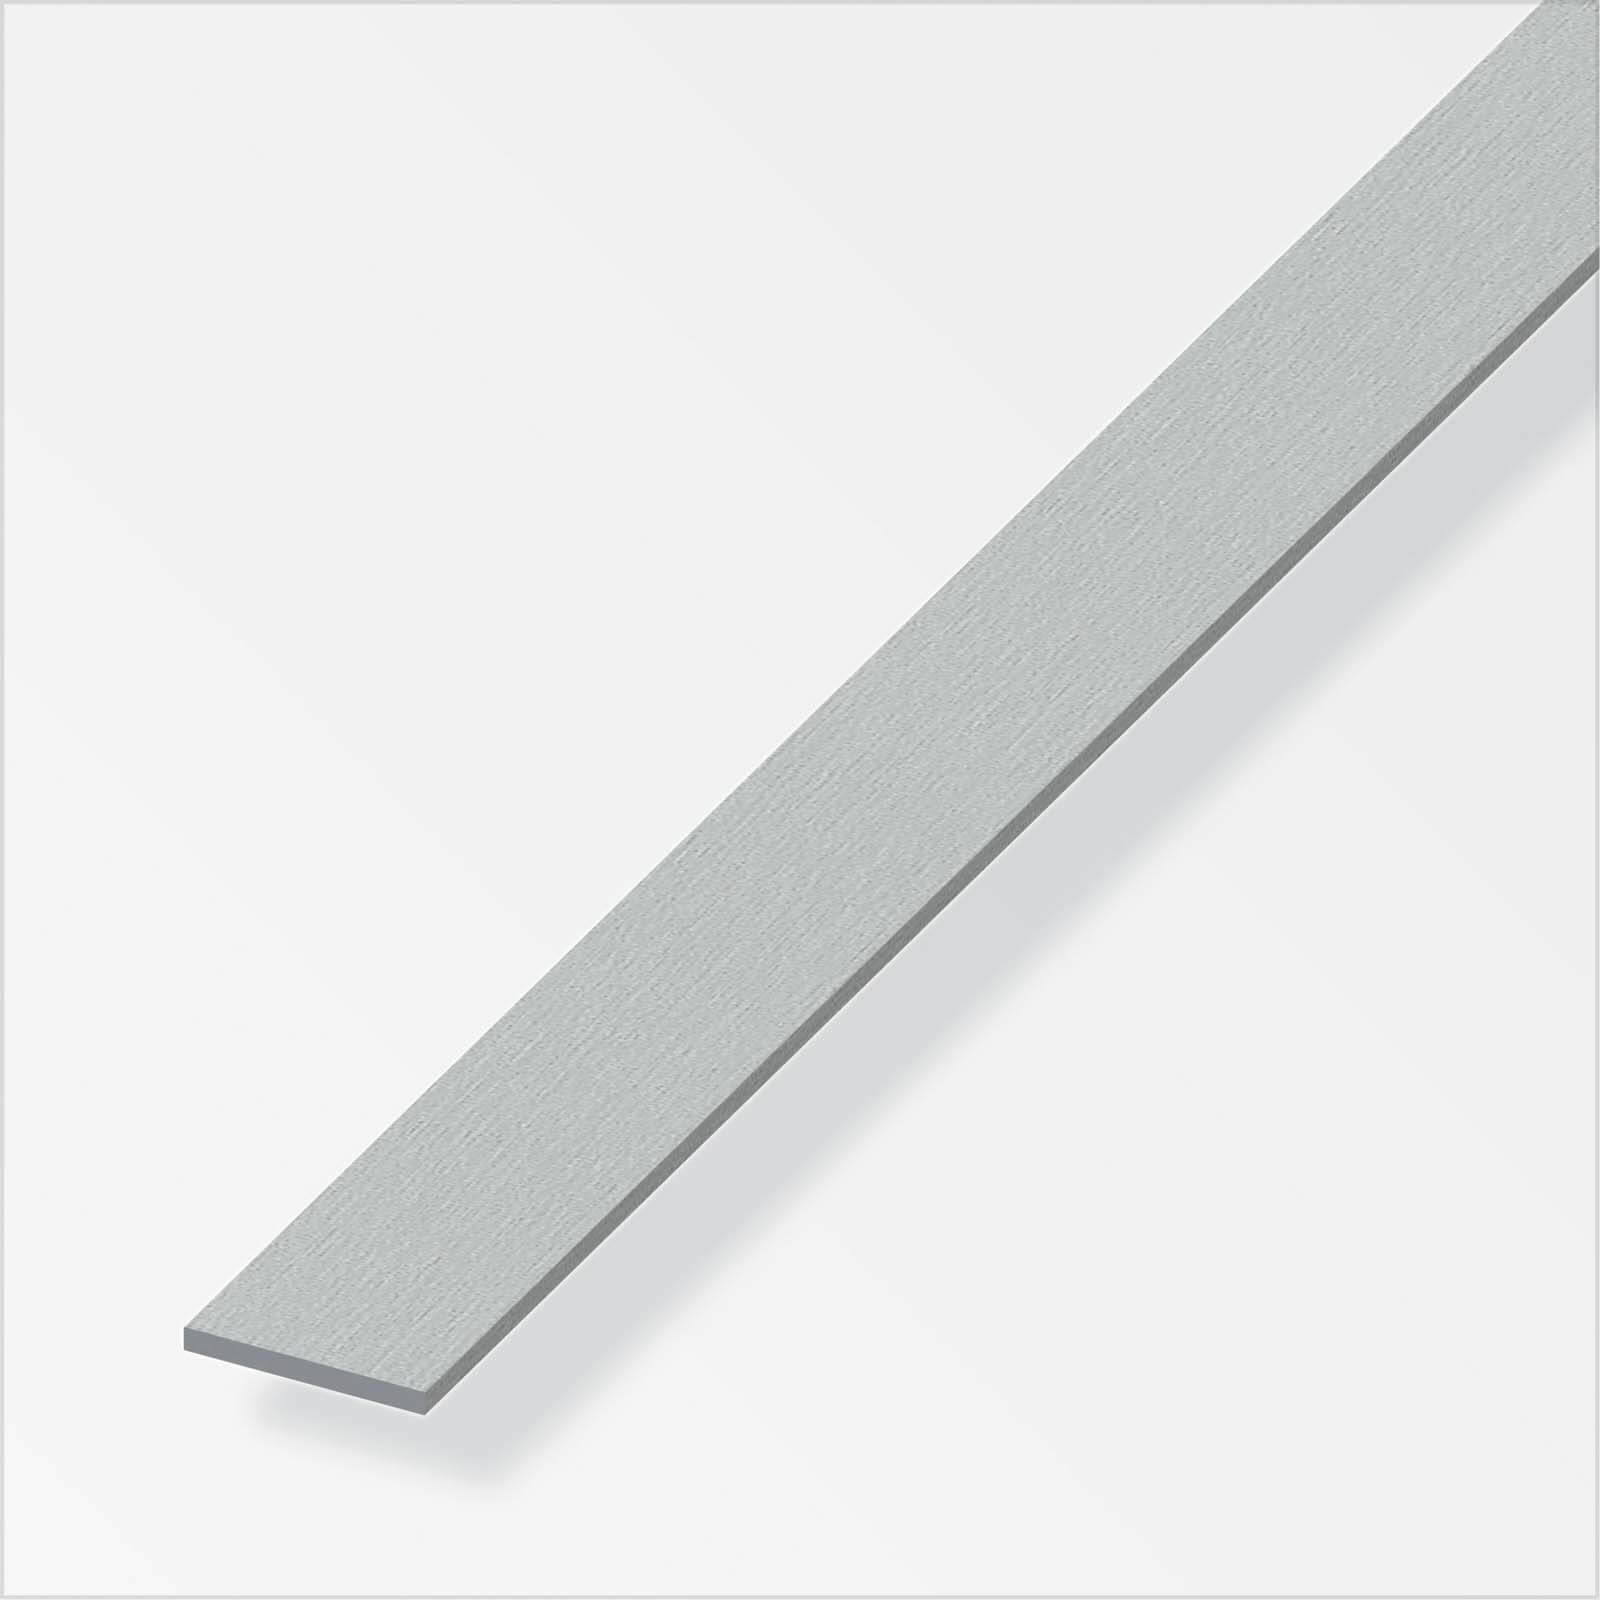 Aluminium Flat Bar Profile - Brushed Stainless Steel - 20mm x 2mm x 1m